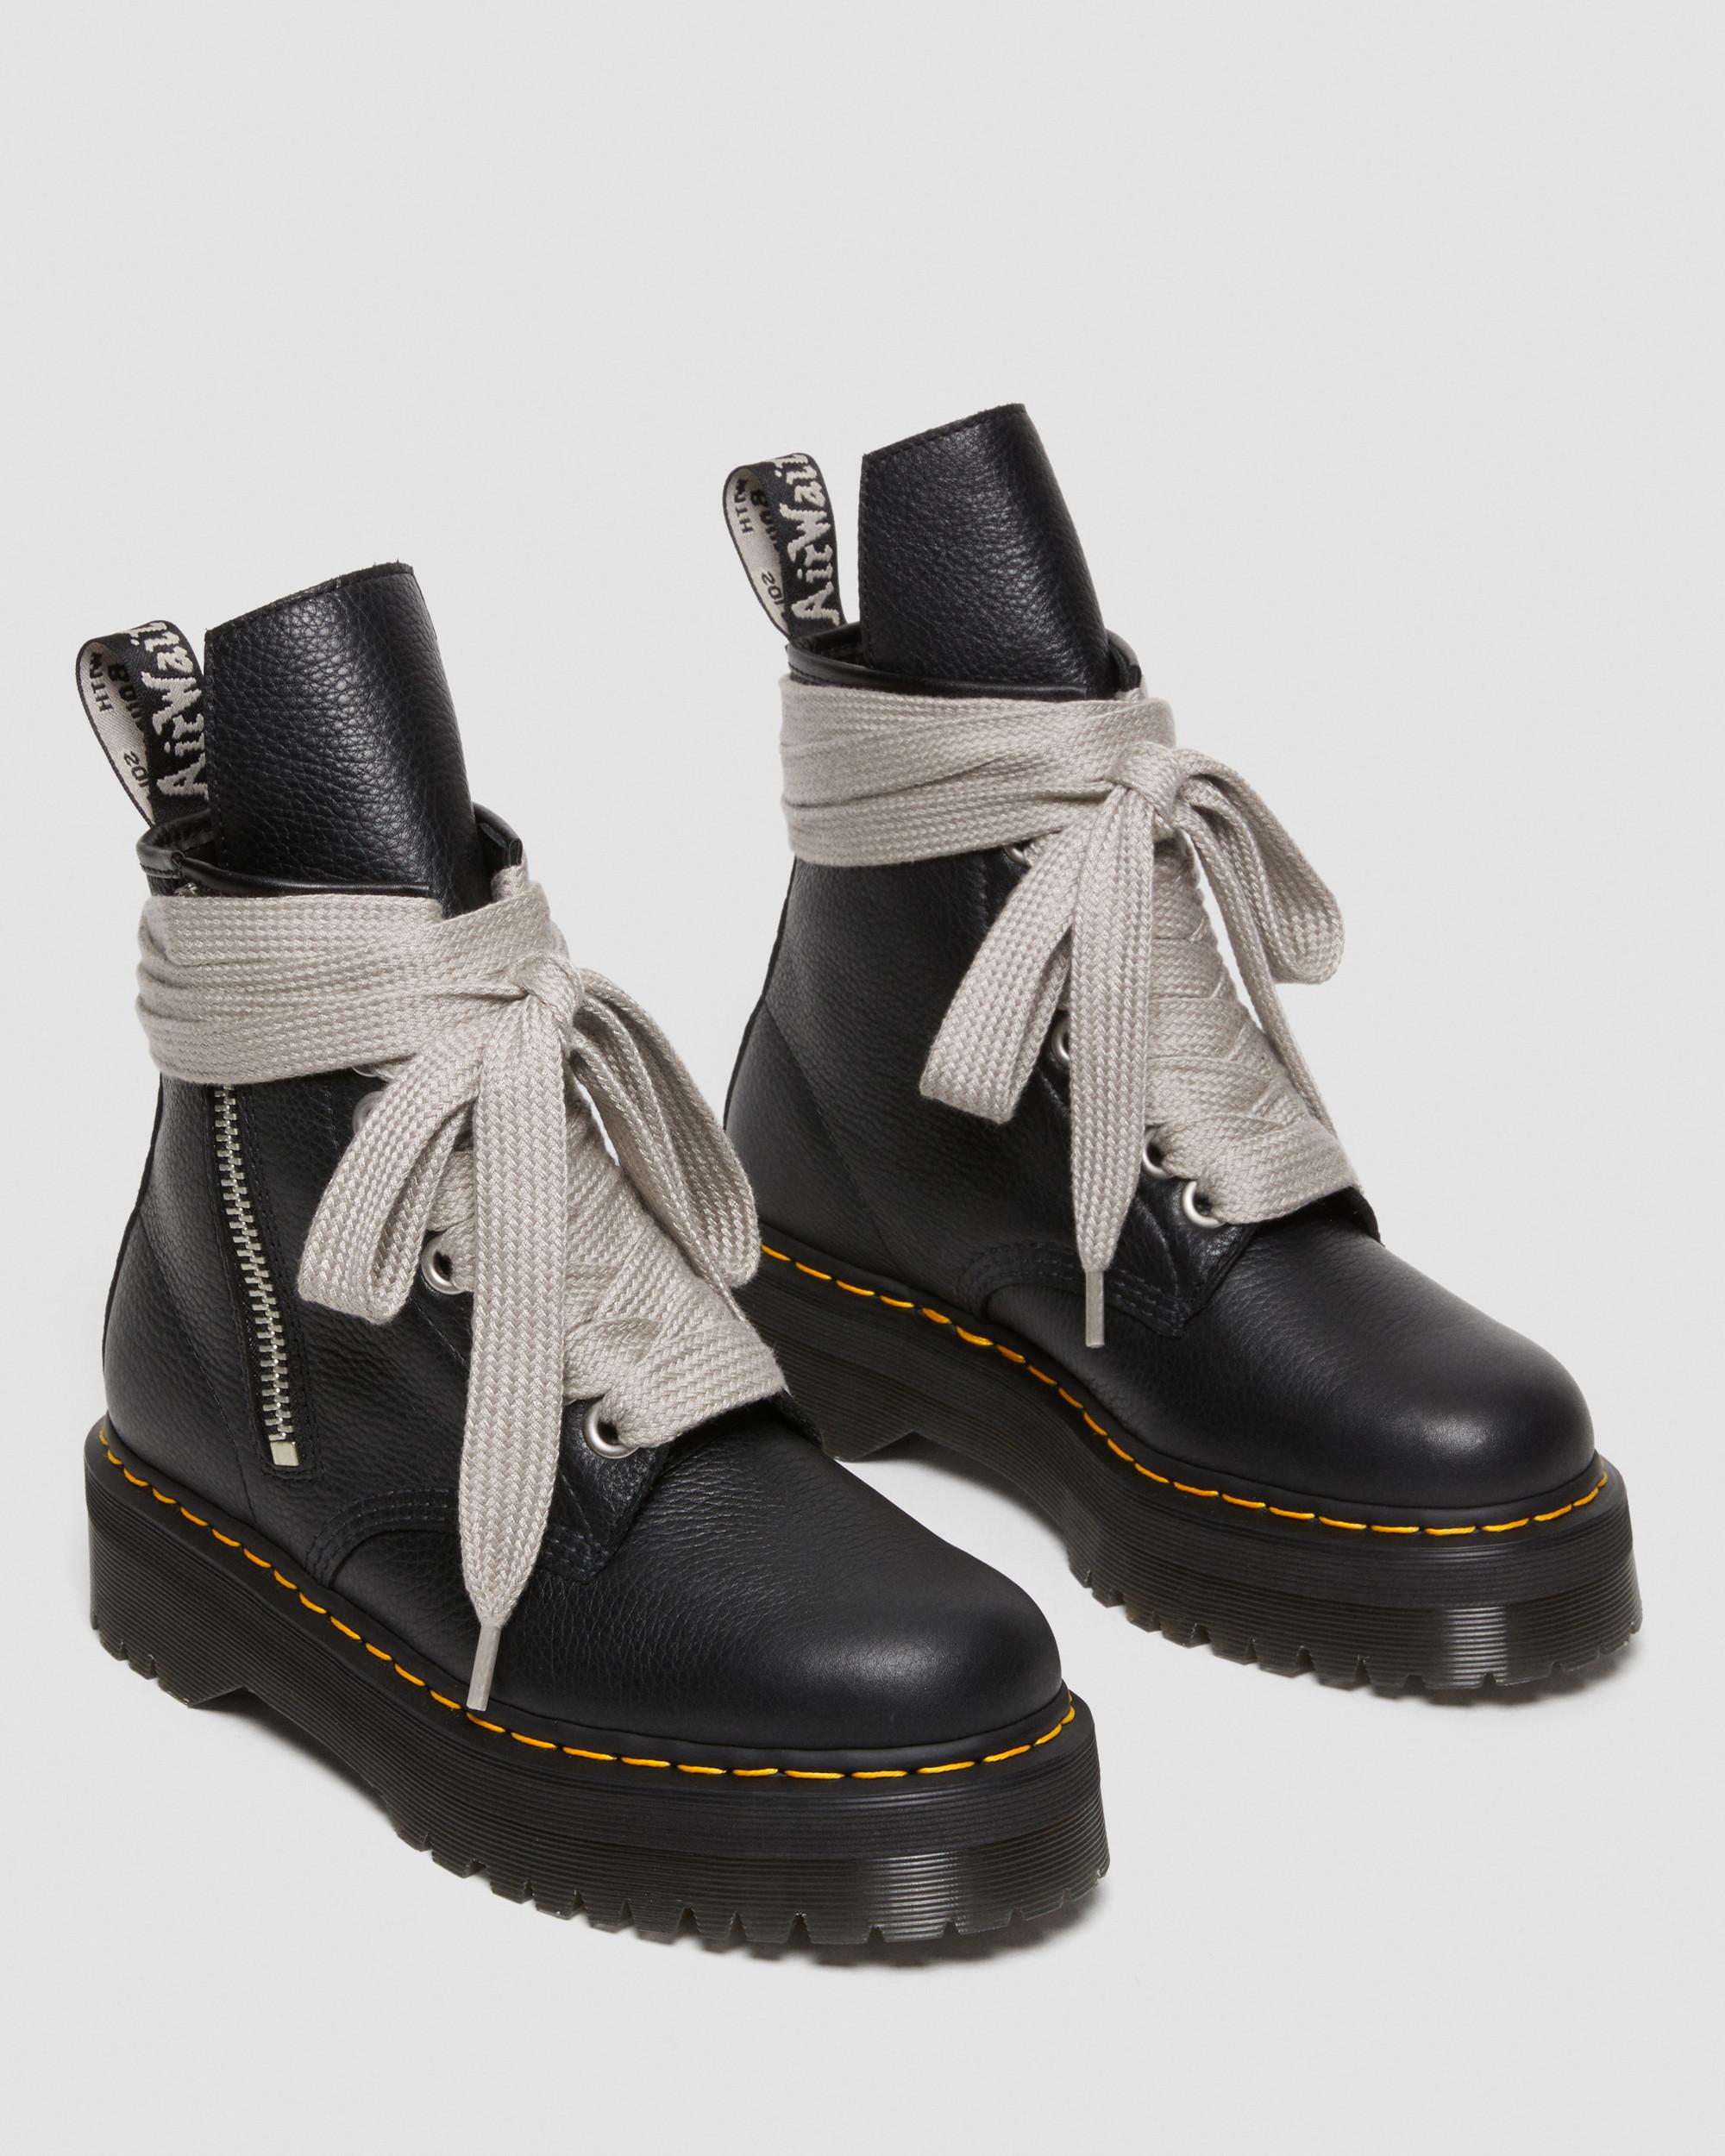 Rick Owens 80mm leather platform boots - Black